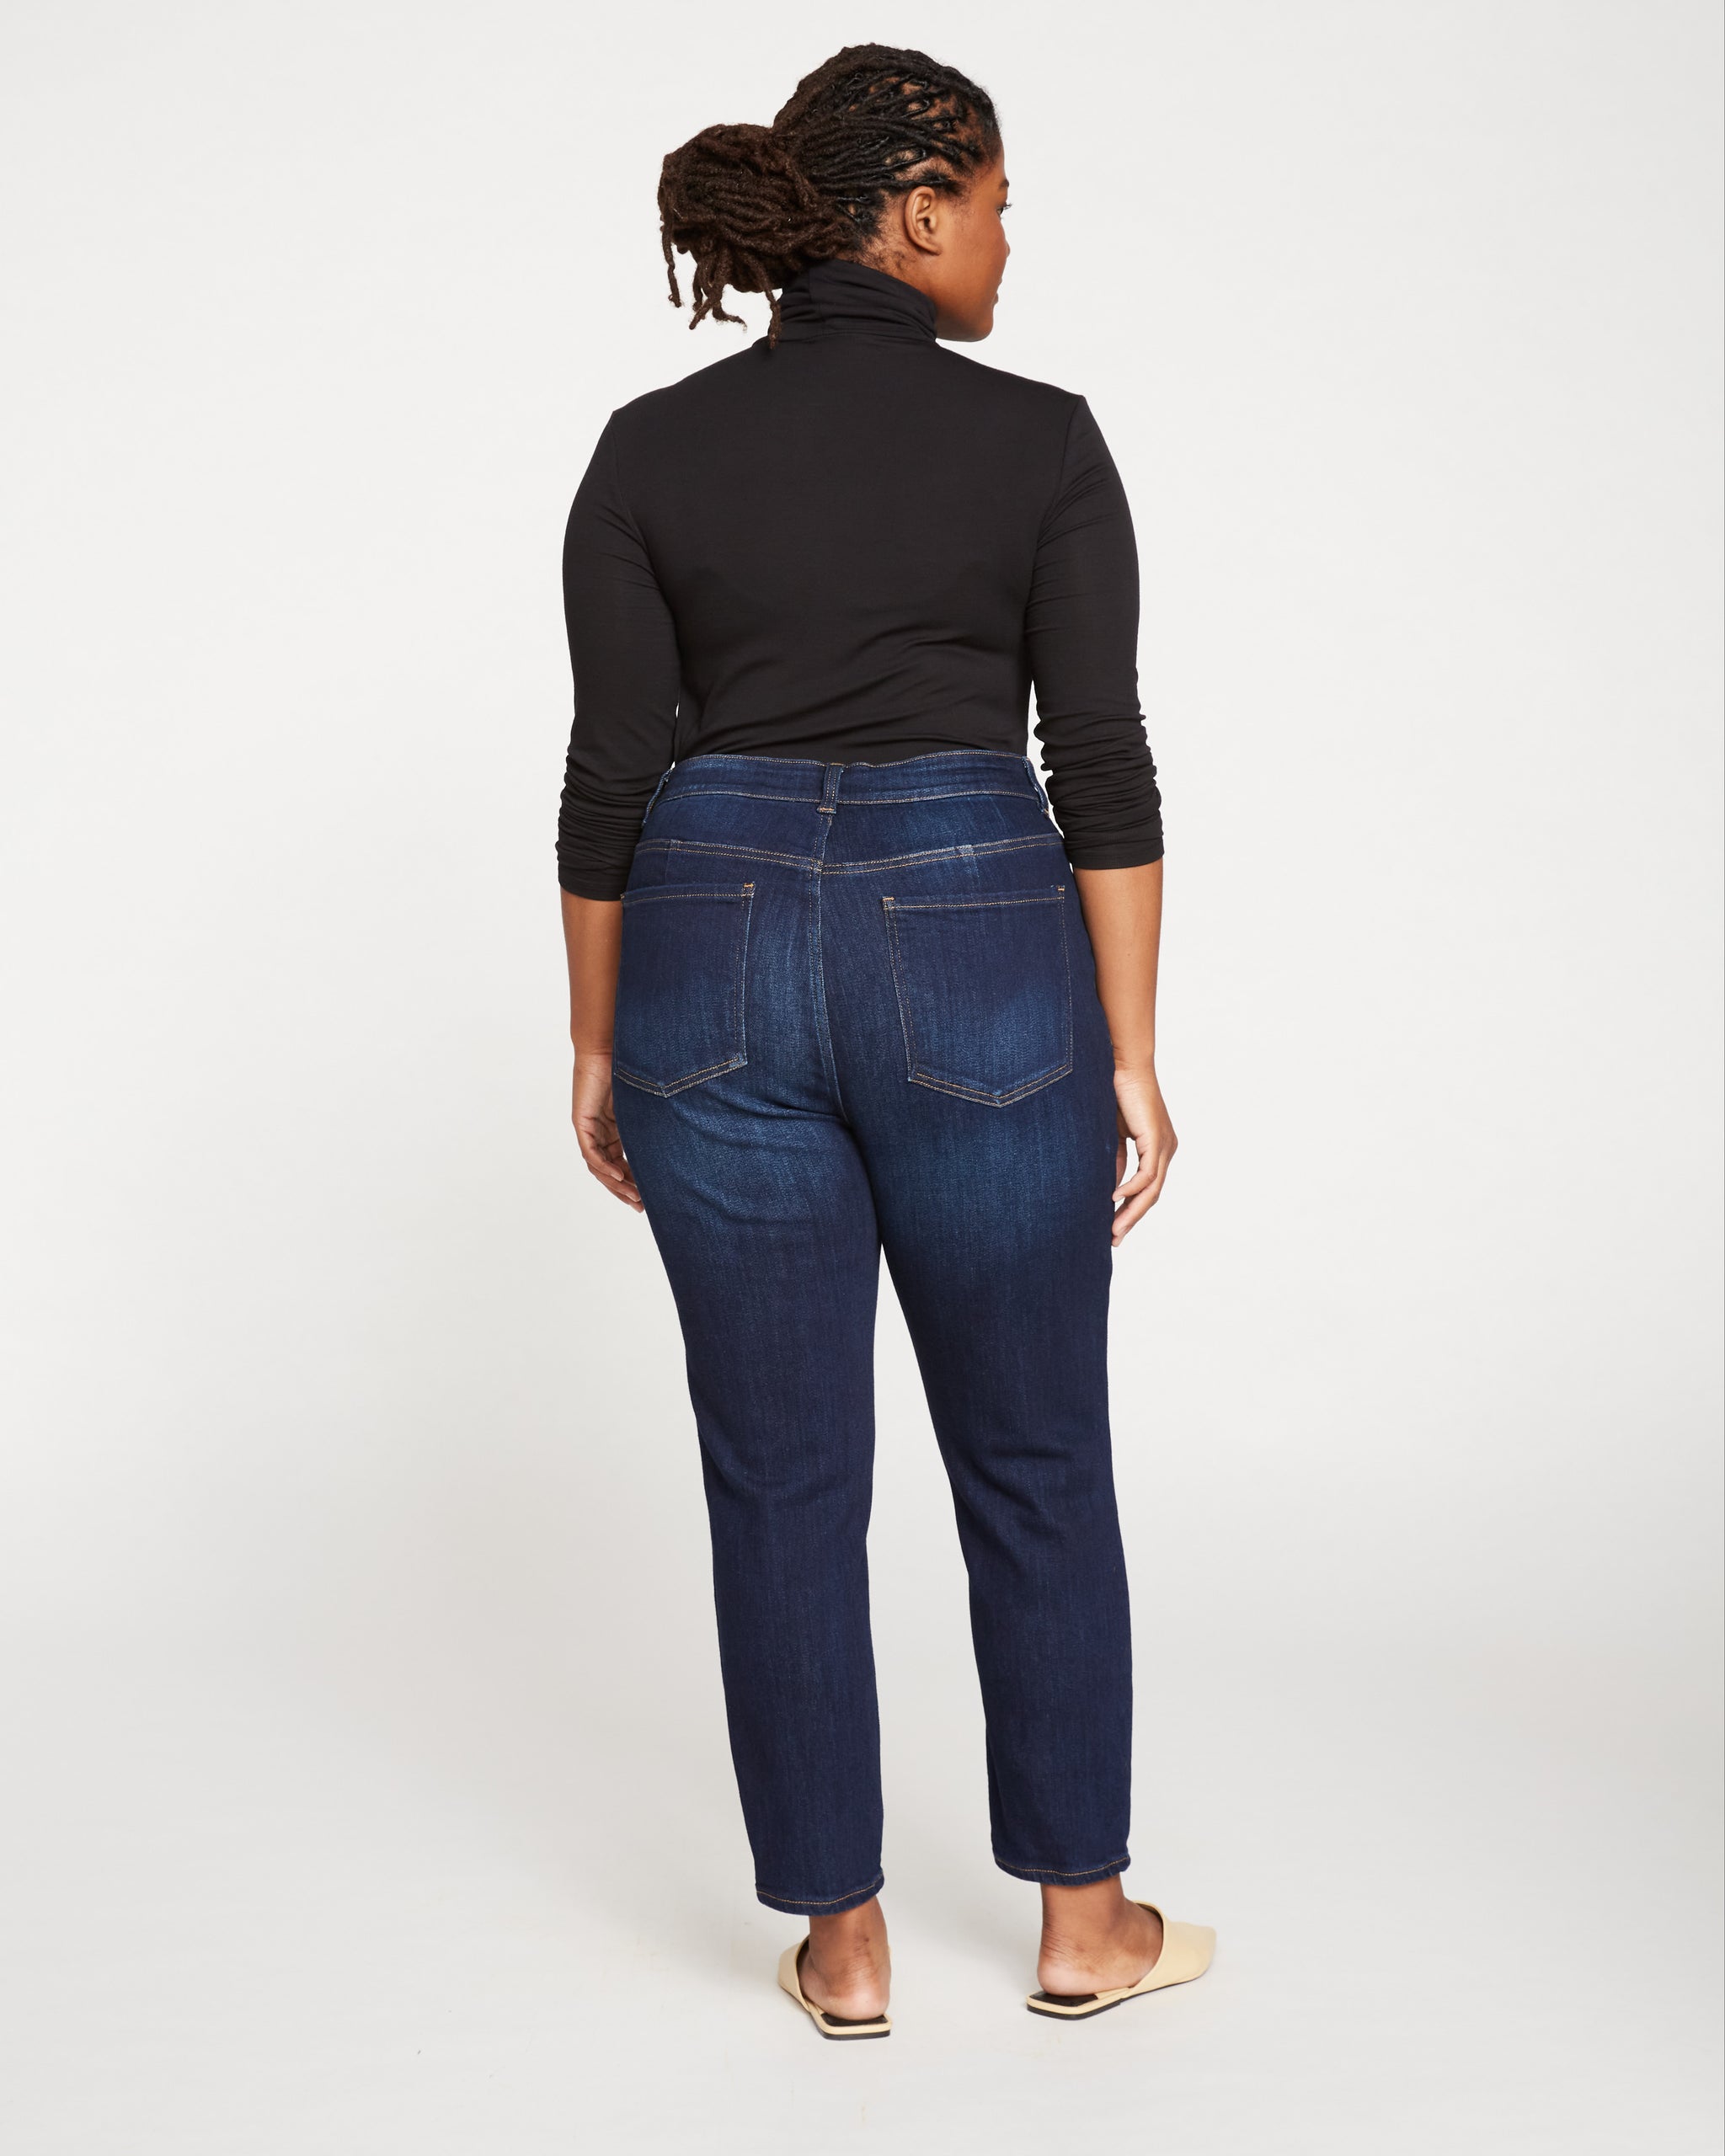 Women's High-Rise Slim Straight Fit Jeans - Universal Thread Medium Wash 8  Long